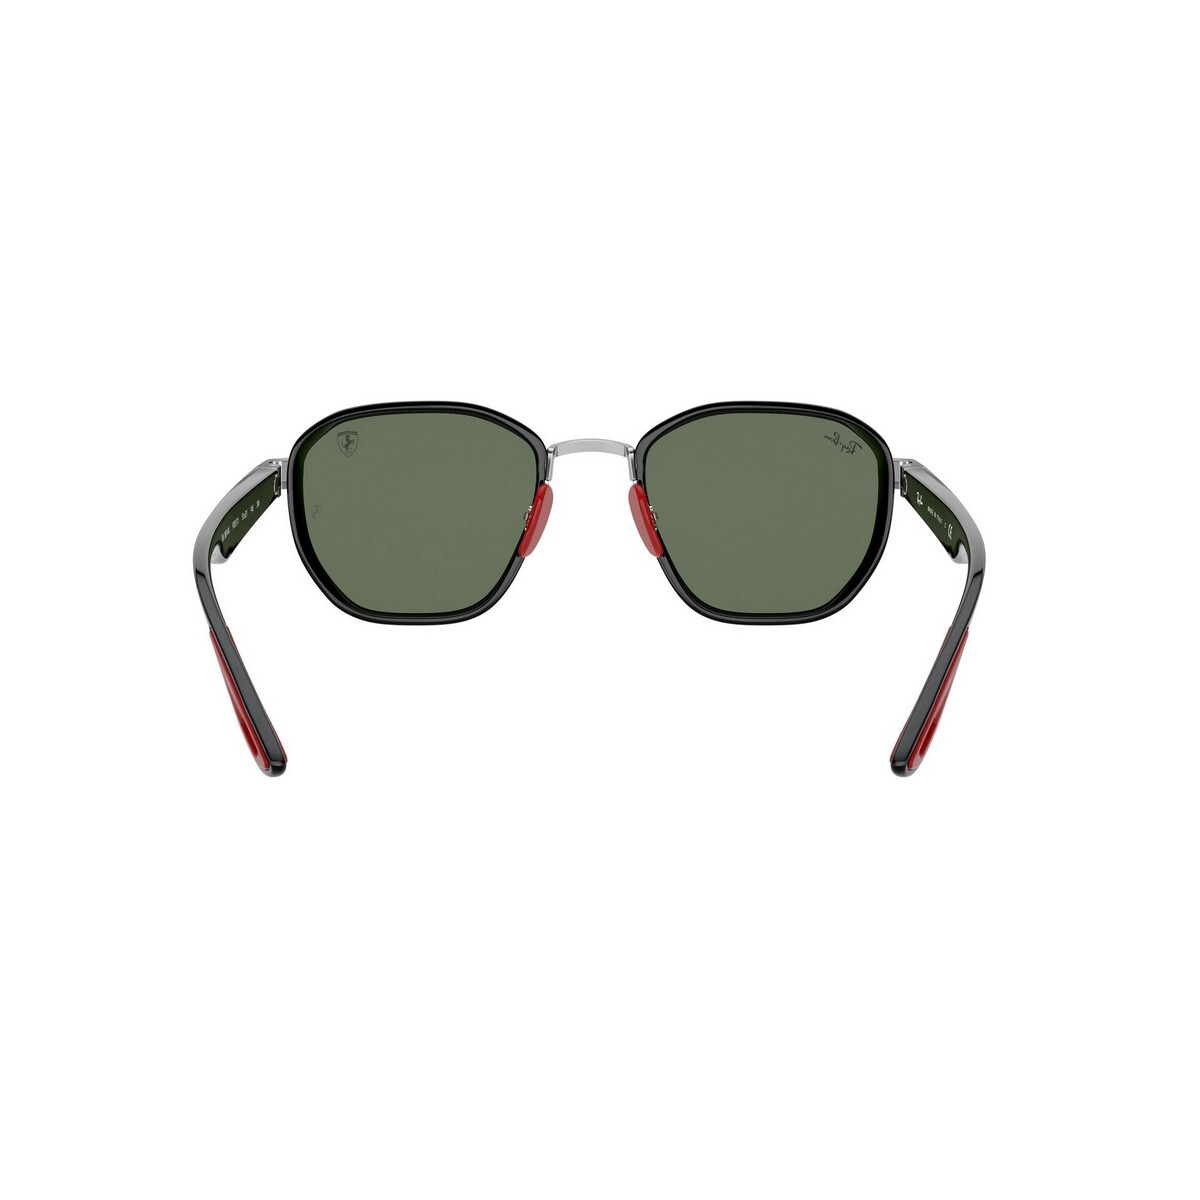 Ray-Ban Unisex Frame With  Dark Green Lens Sunglass